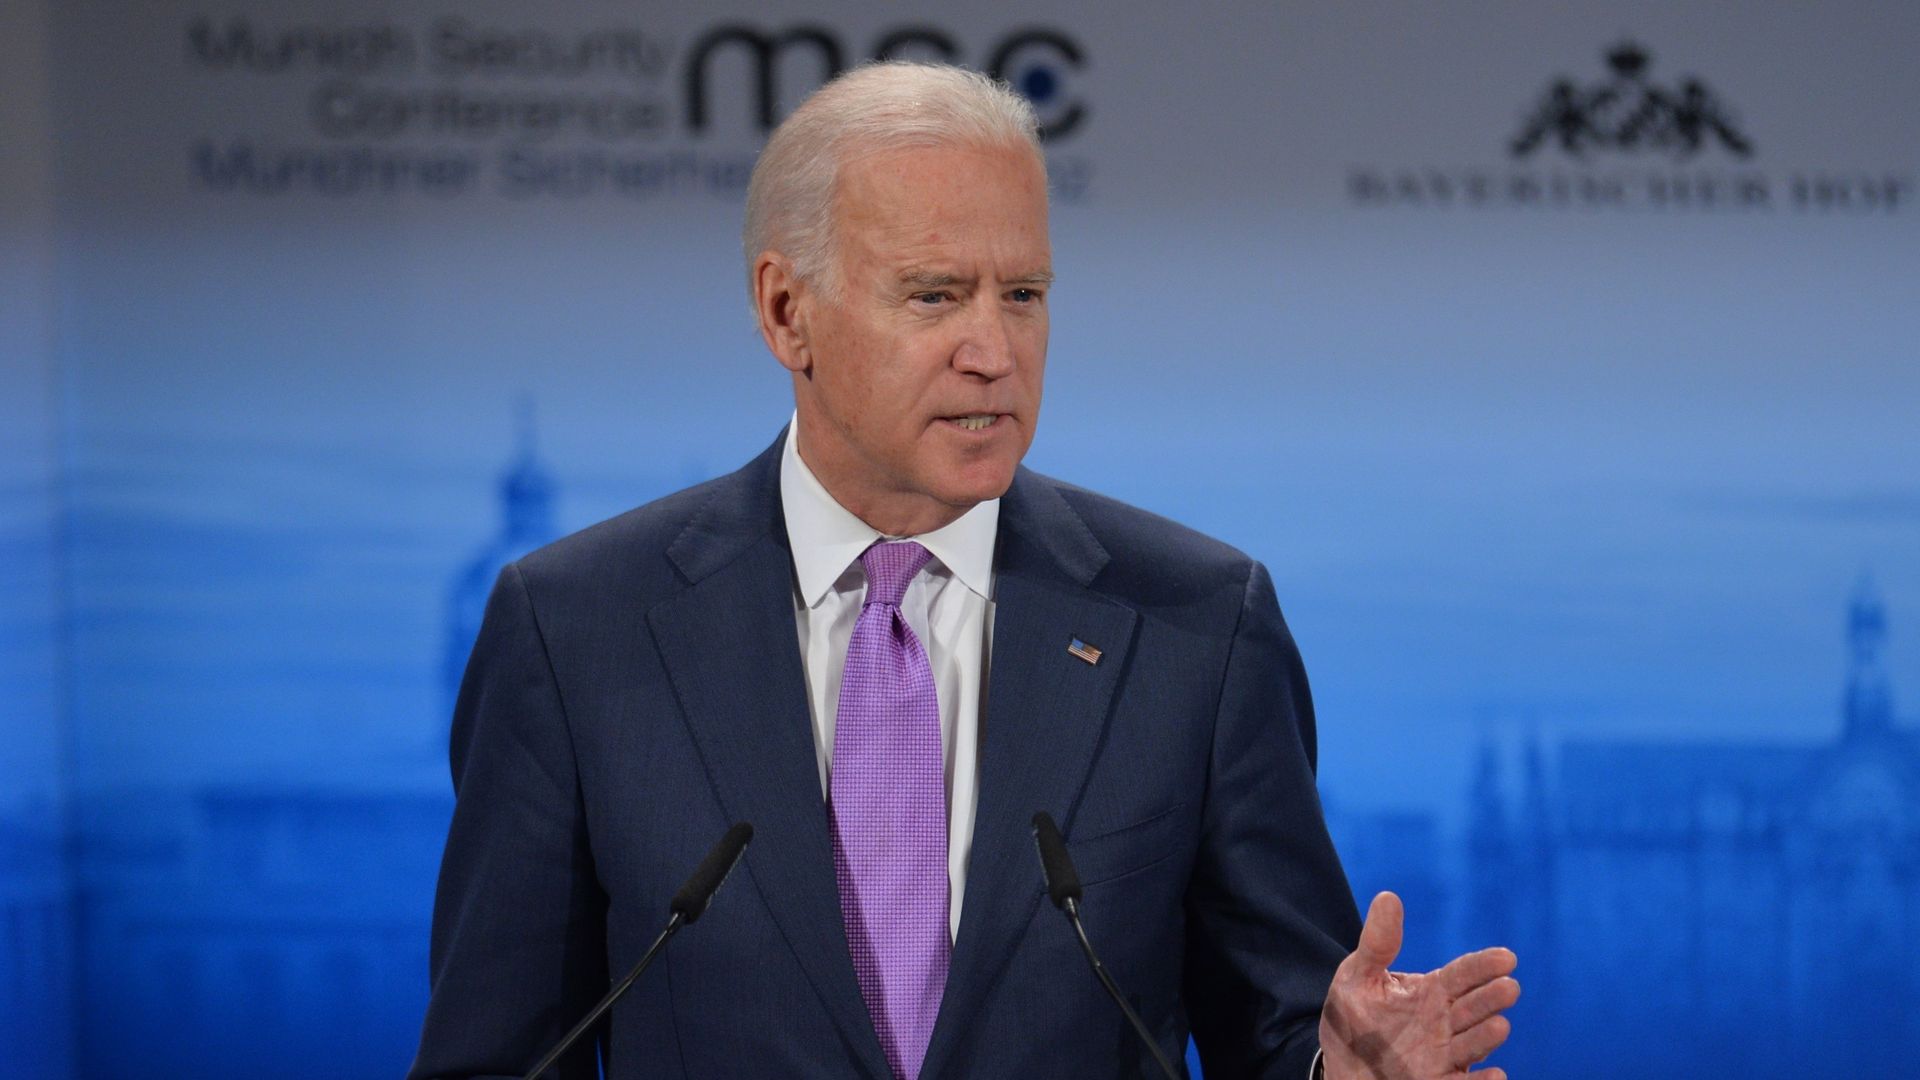 Joe Biden is seen addressing the Munich Security Conference in 2015.